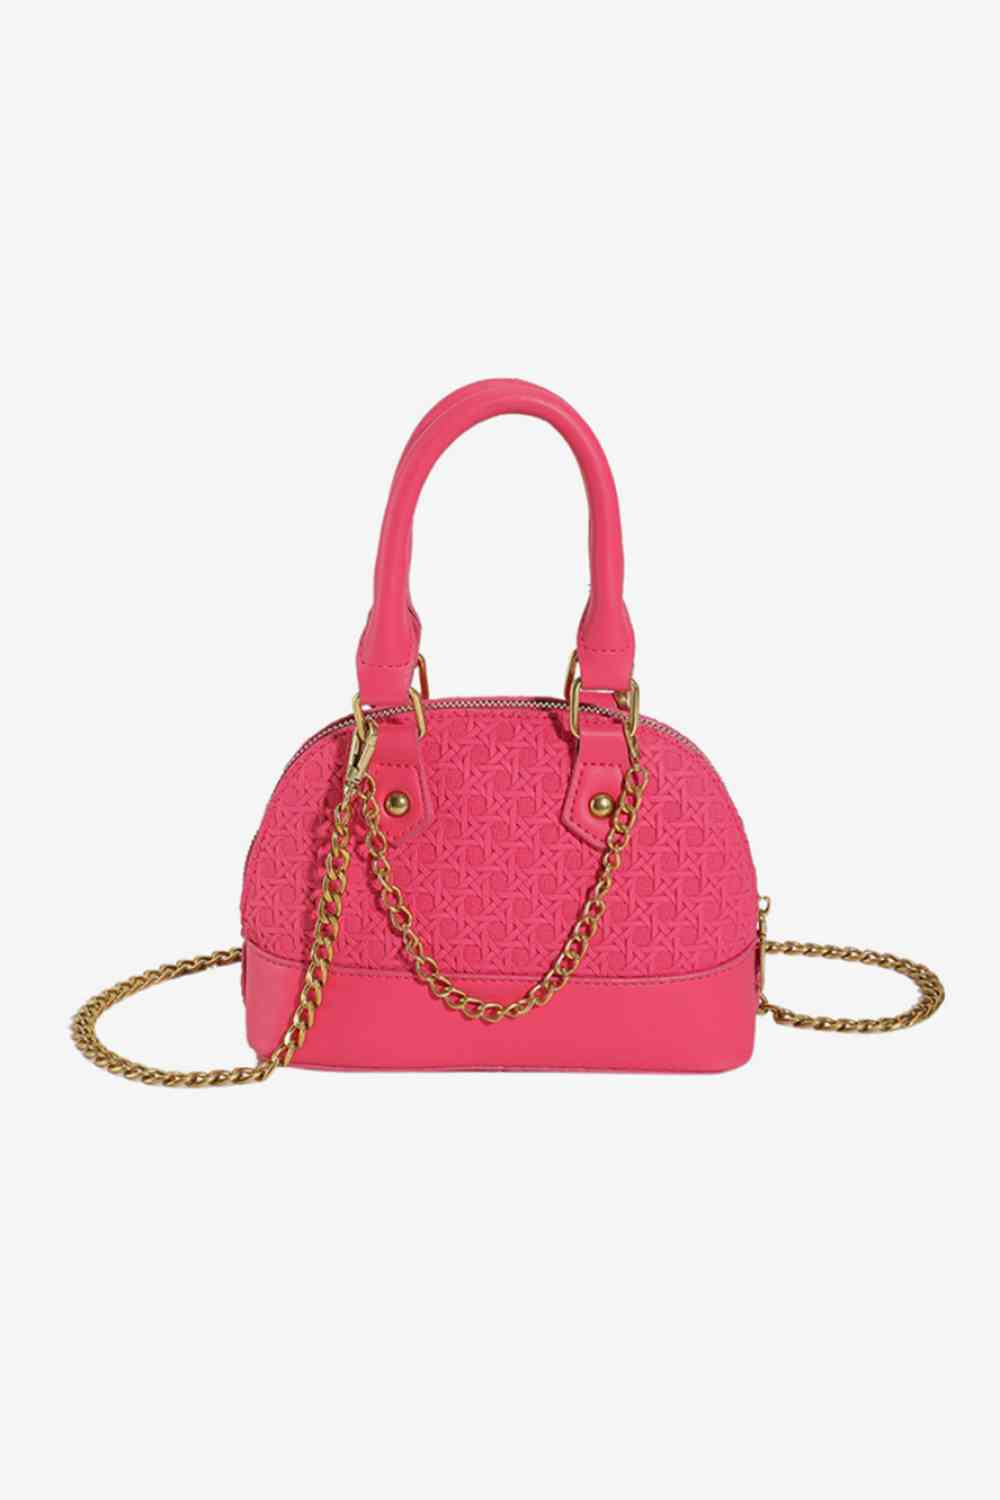 TEEK - Pop Colored PU Leather Crossbody Bag BAG TEEK Trend Hot Pink  